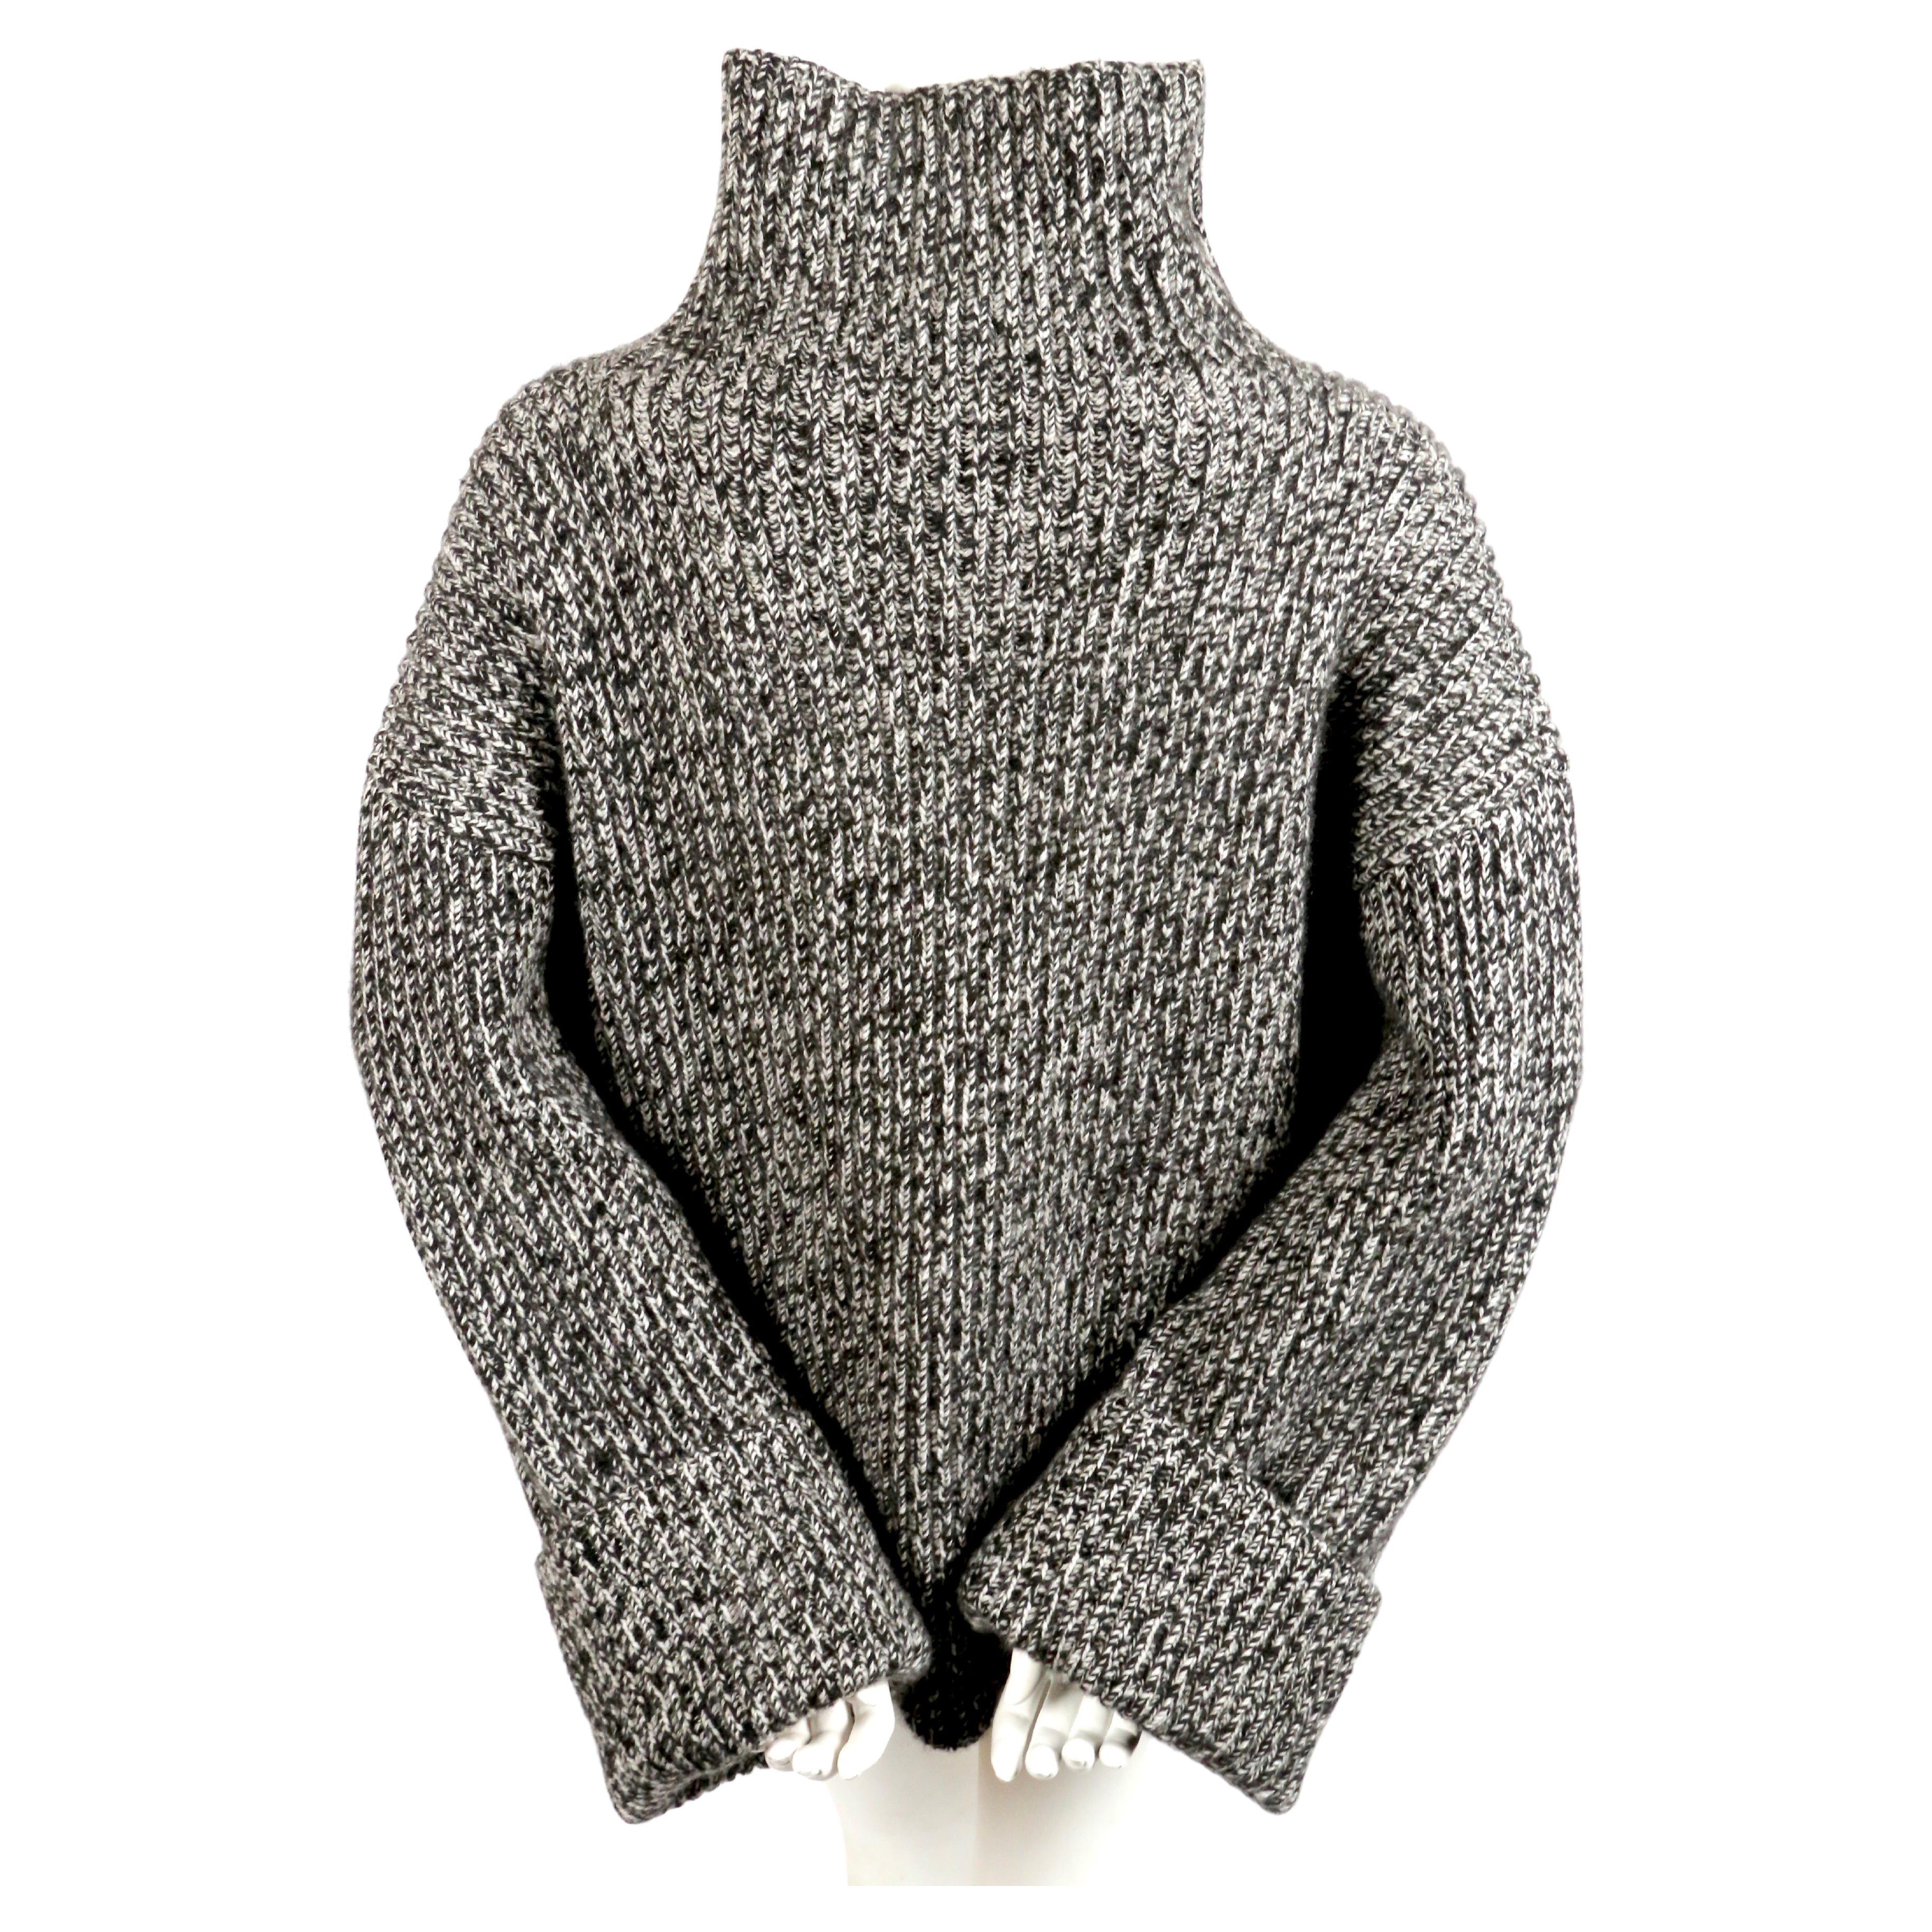 CELINE by PHOEBE PHILO black cashmere turtleneck sweater with underarm cutouts 1